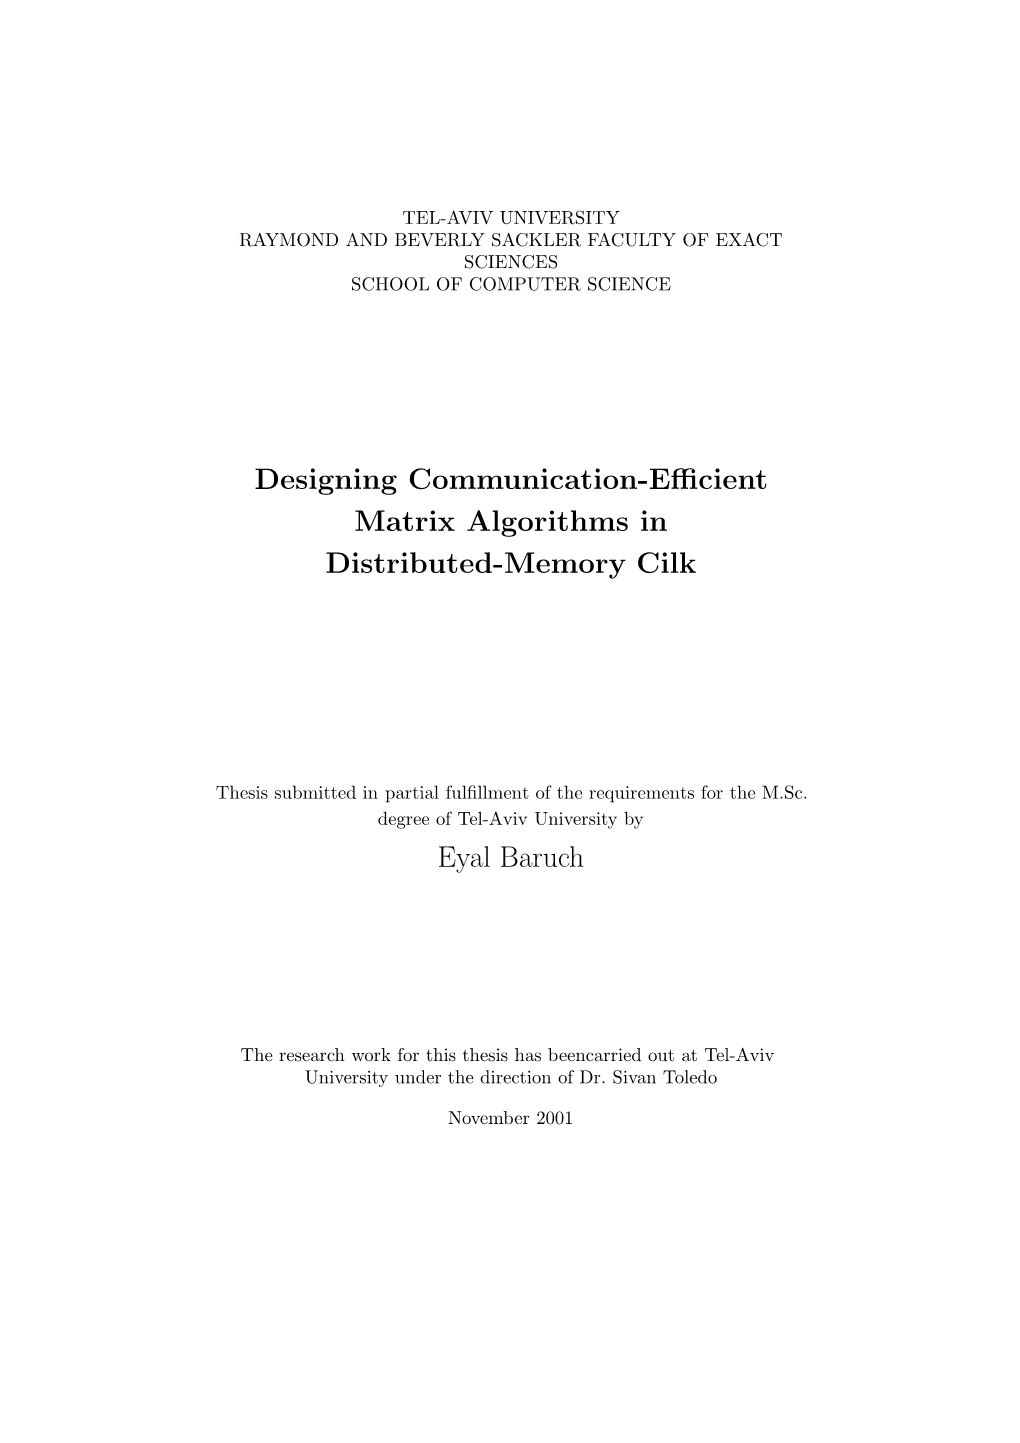 Designing Communication-Efficient Matrix Algorithms in Distributed-Memory Cilk Eyal Baruch